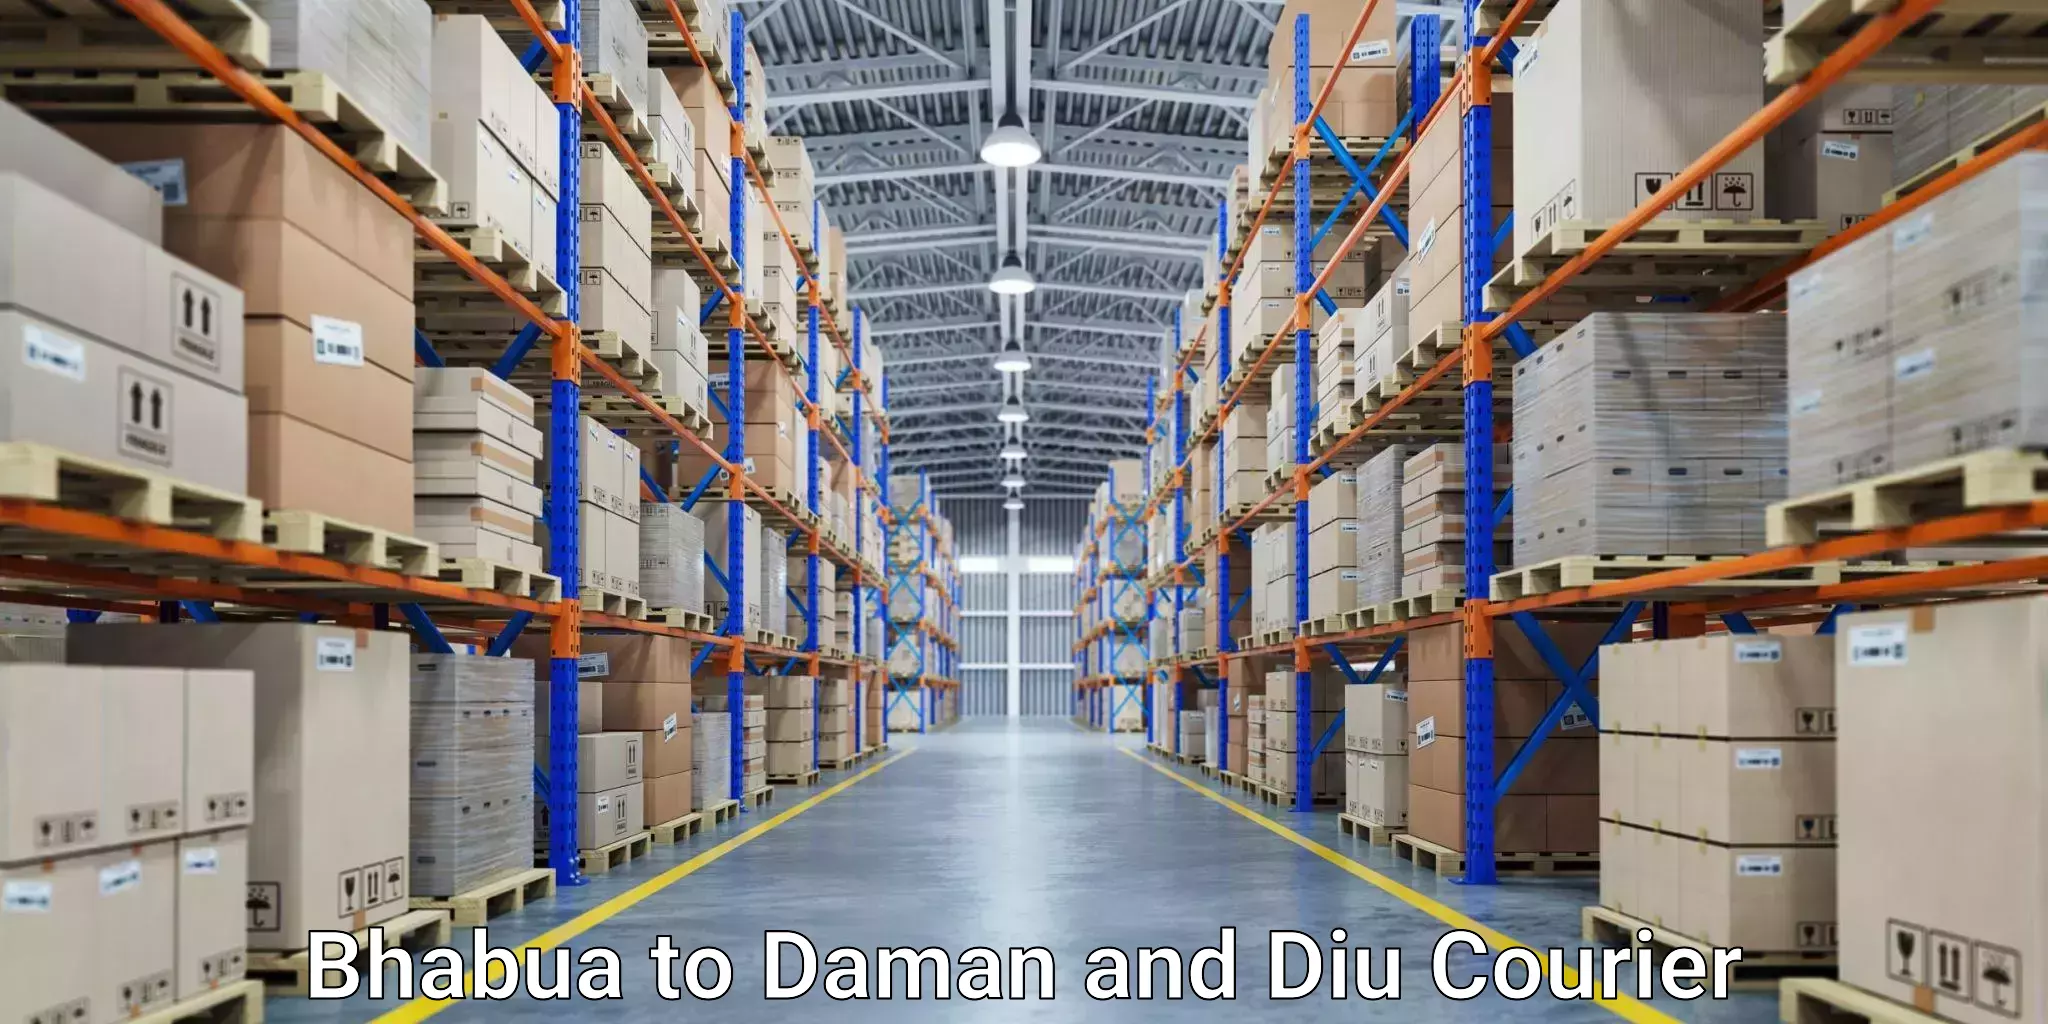 Courier service comparison Bhabua to Daman and Diu